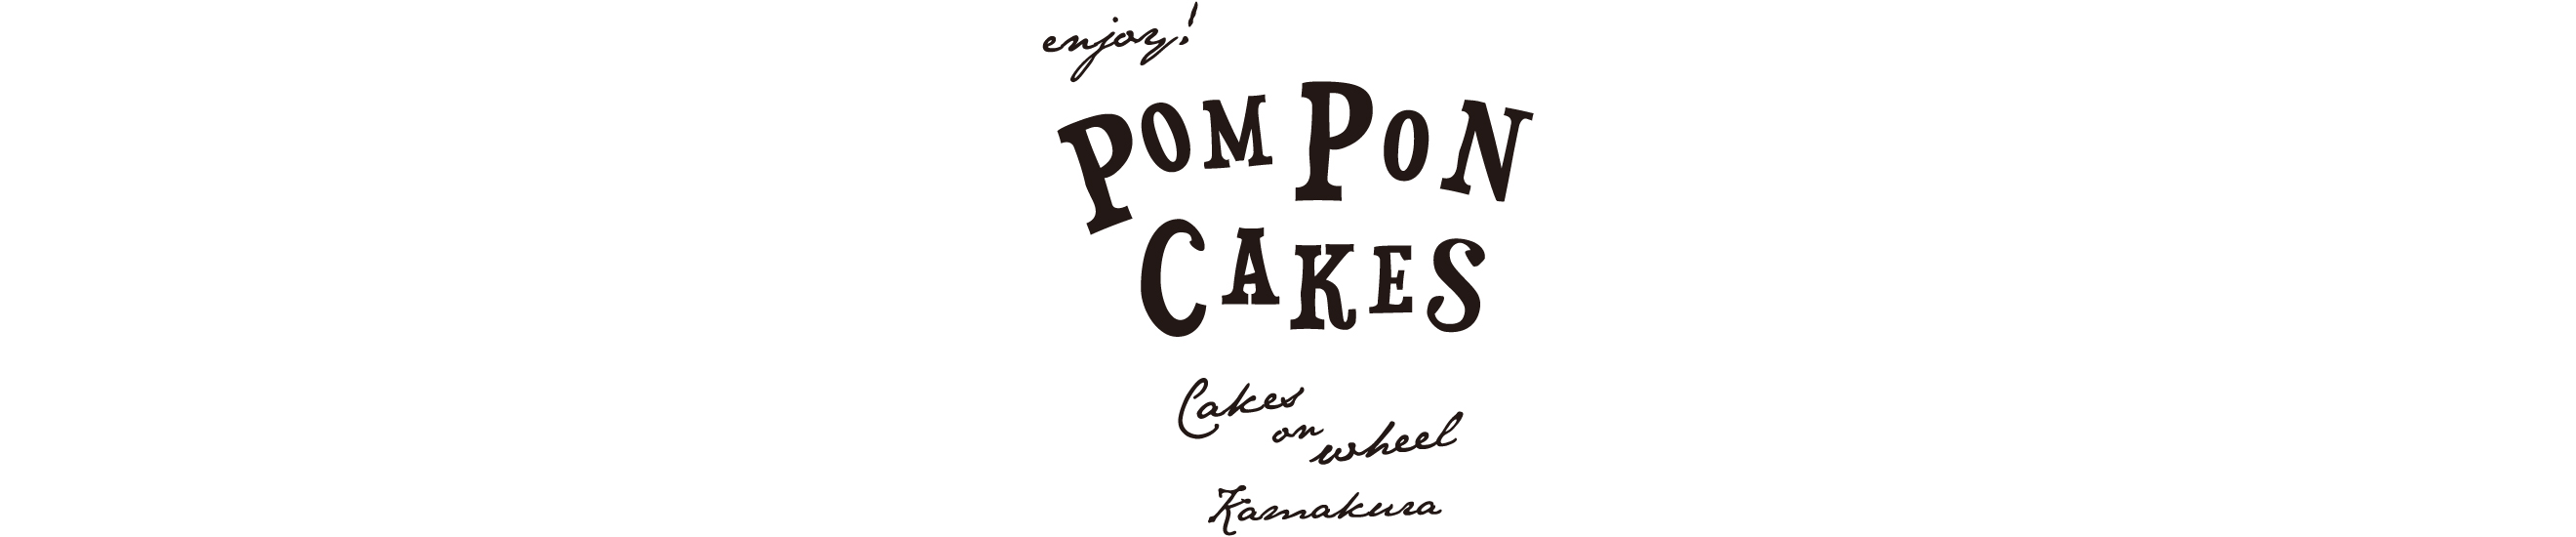 POMPON CAKES